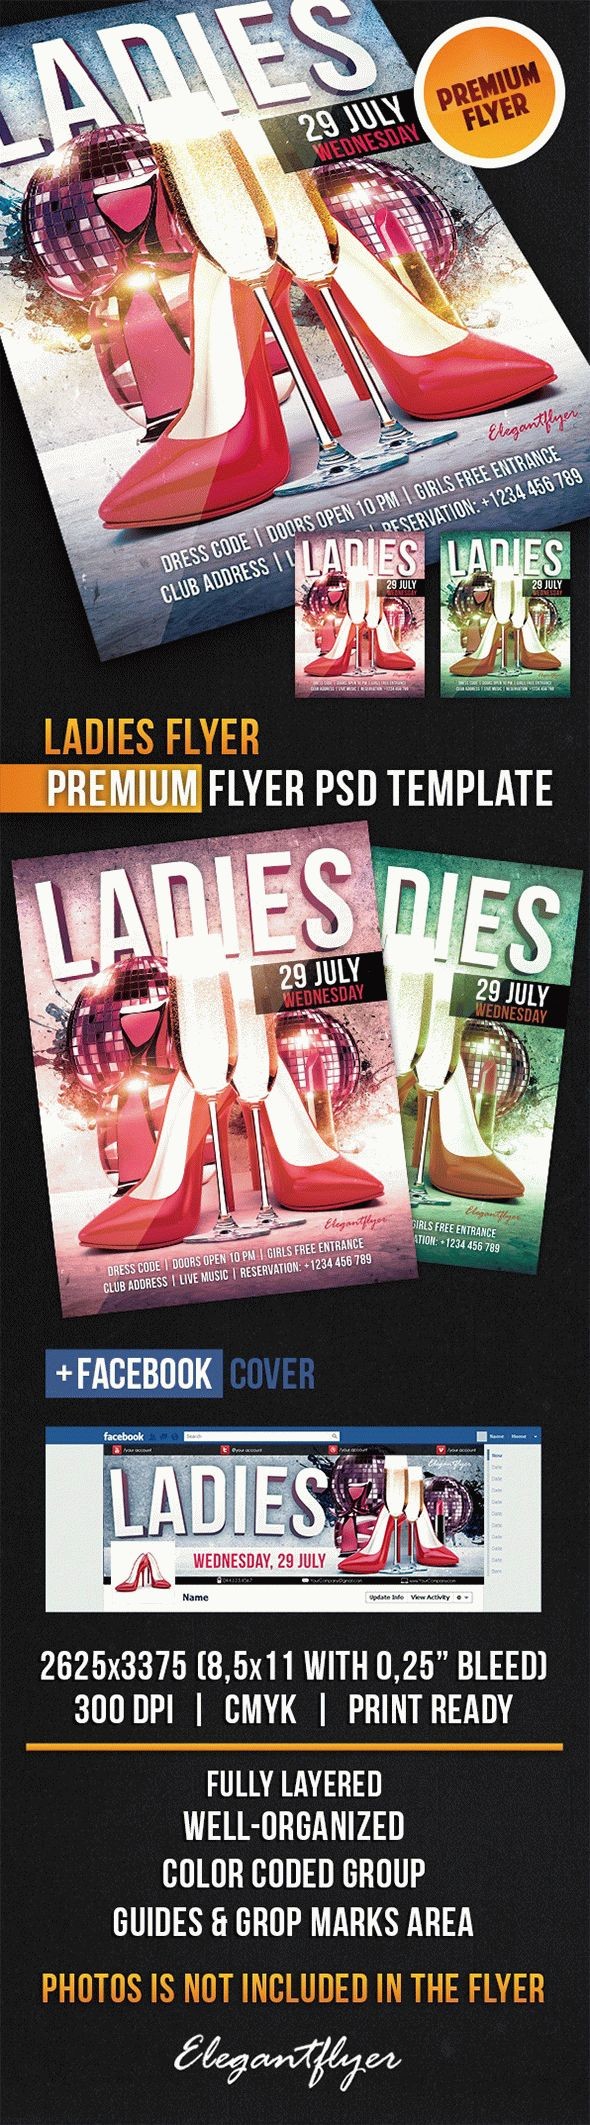 Ladies Flyer by ElegantFlyer